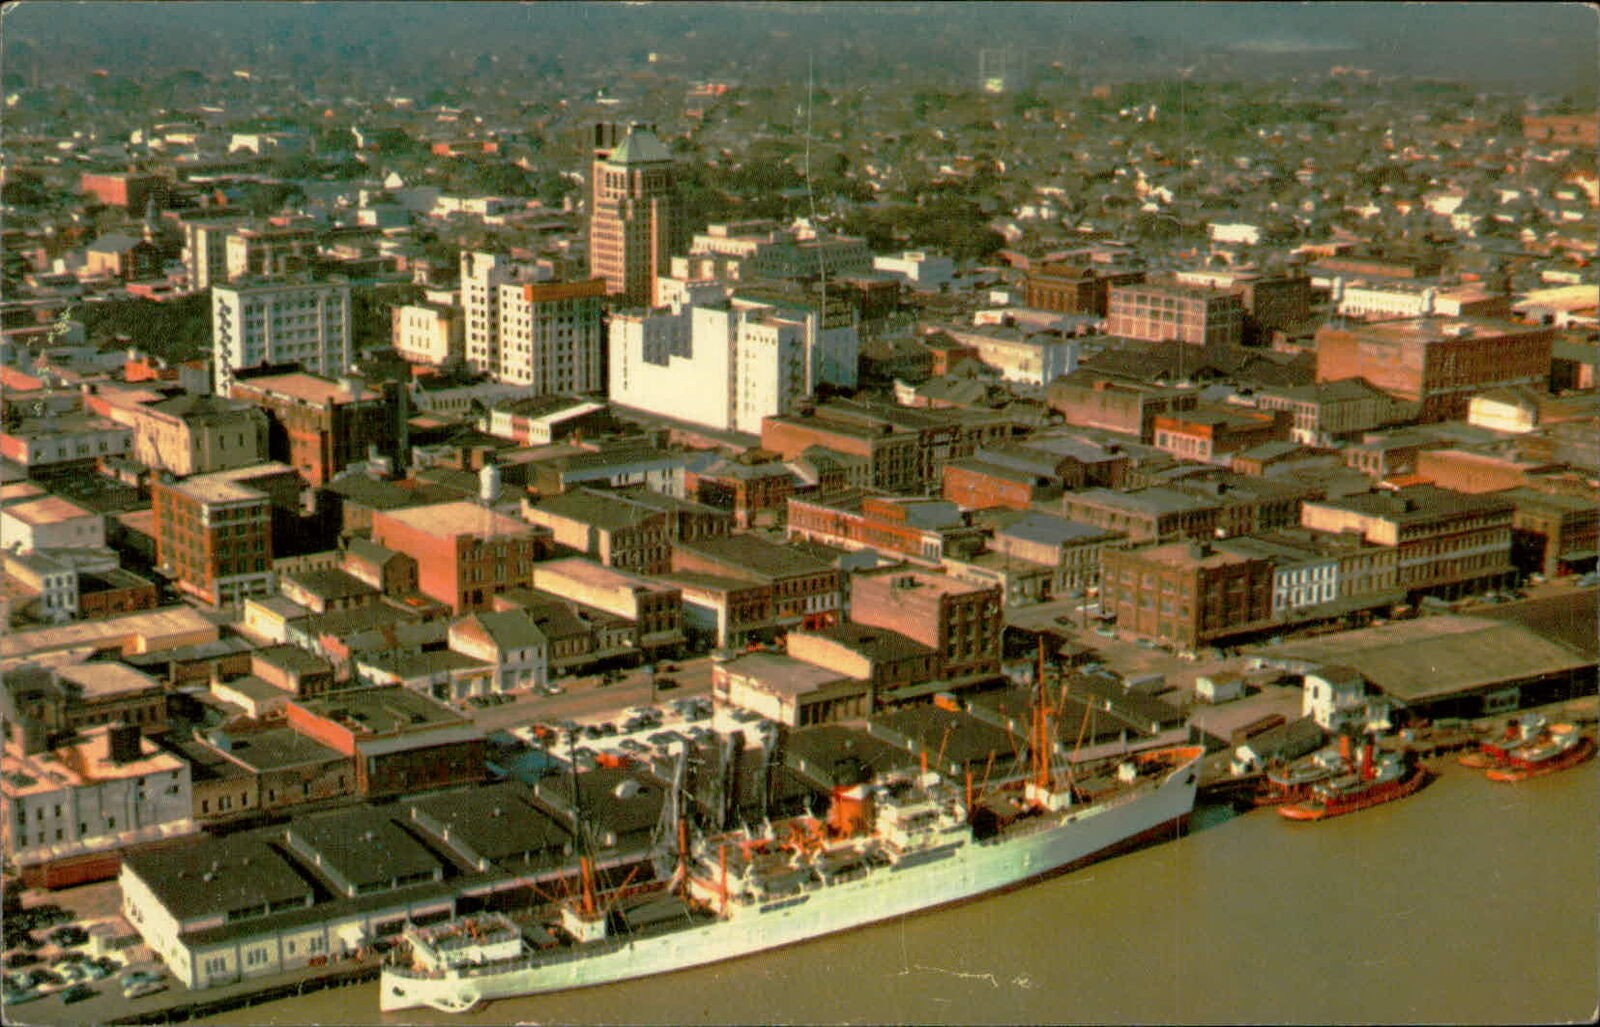 Postcard: MOBILE, ALABAMA... An aerial view